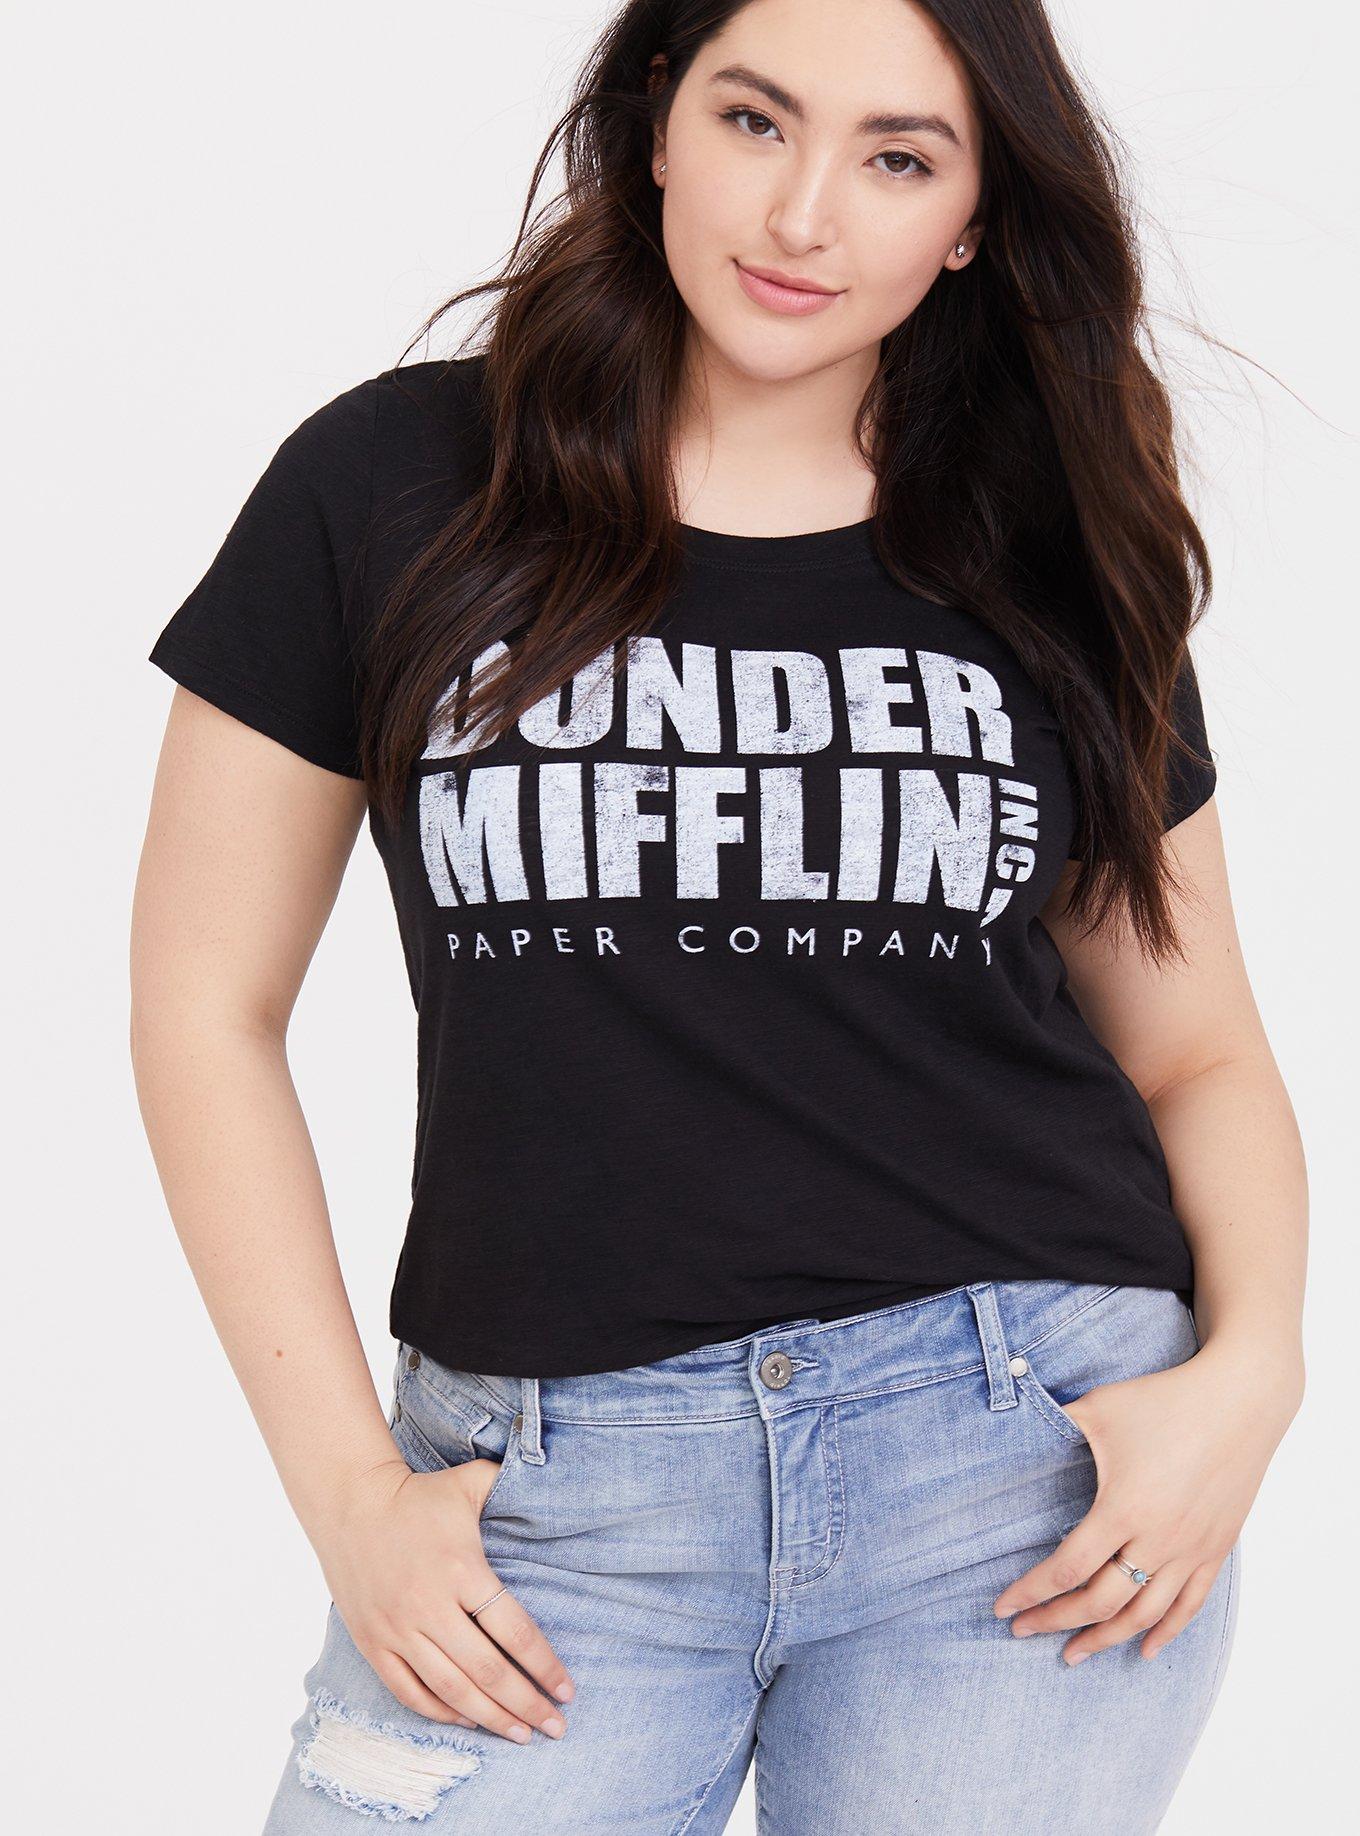 The Office Dunder Mifflin Logo Women's Black Short Sleeve Crew